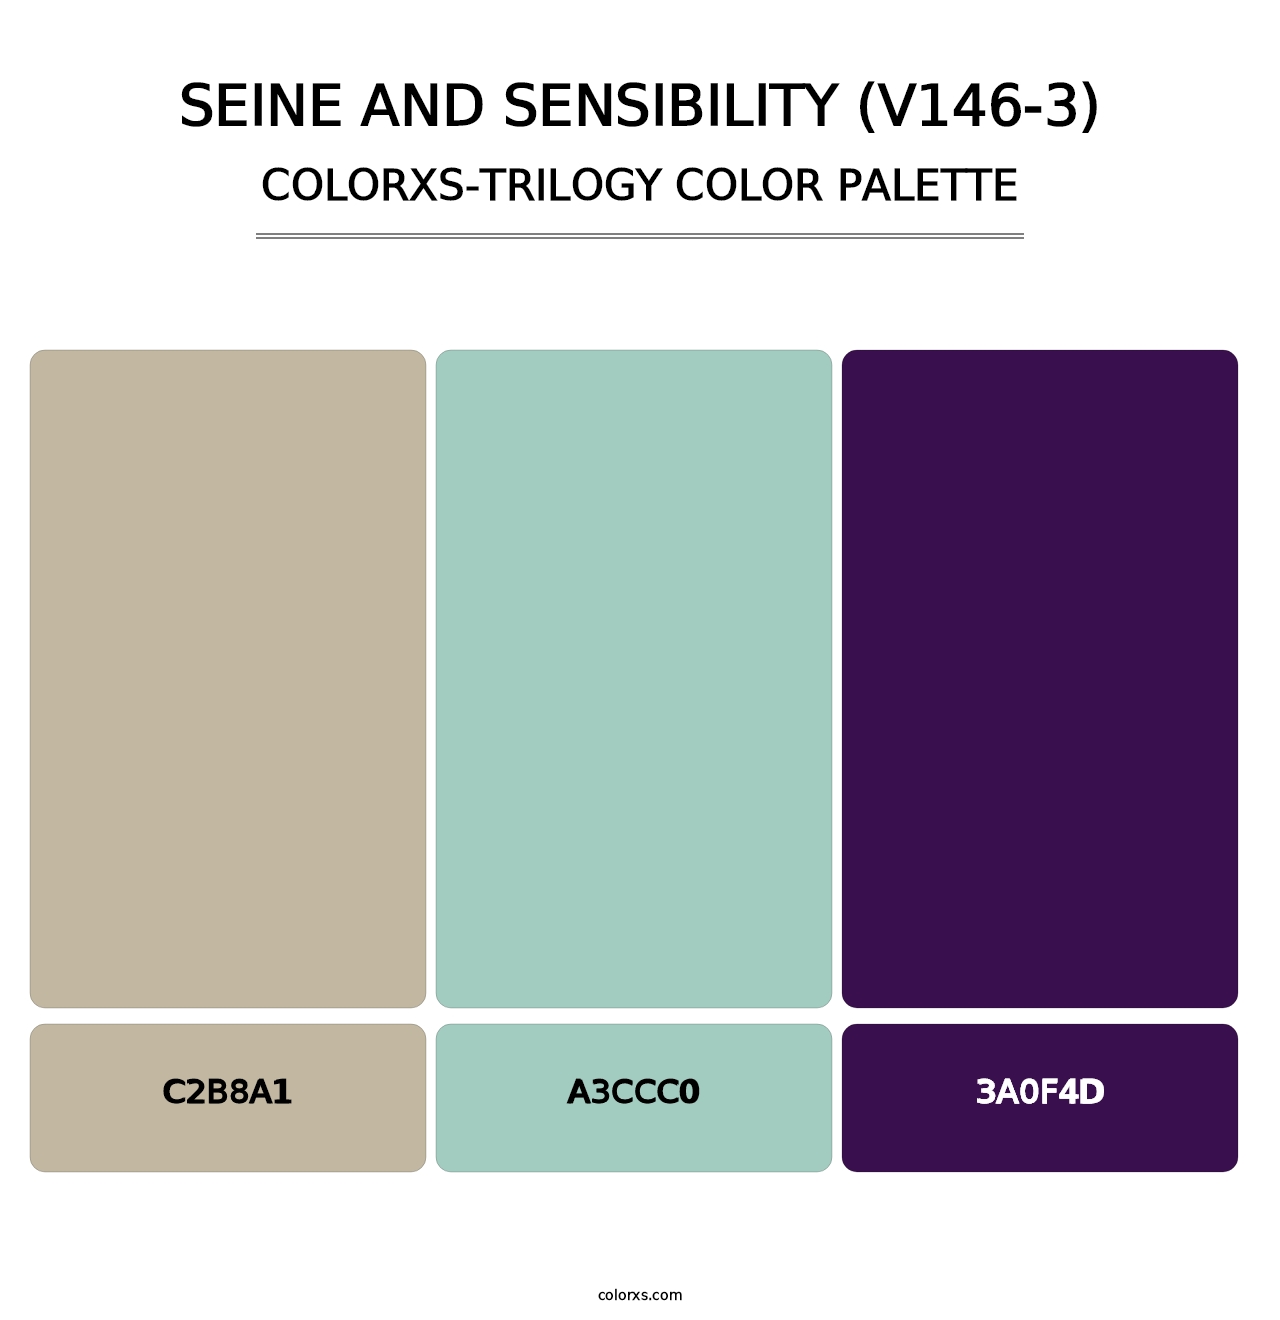 Seine and Sensibility (V146-3) - Colorxs Trilogy Palette